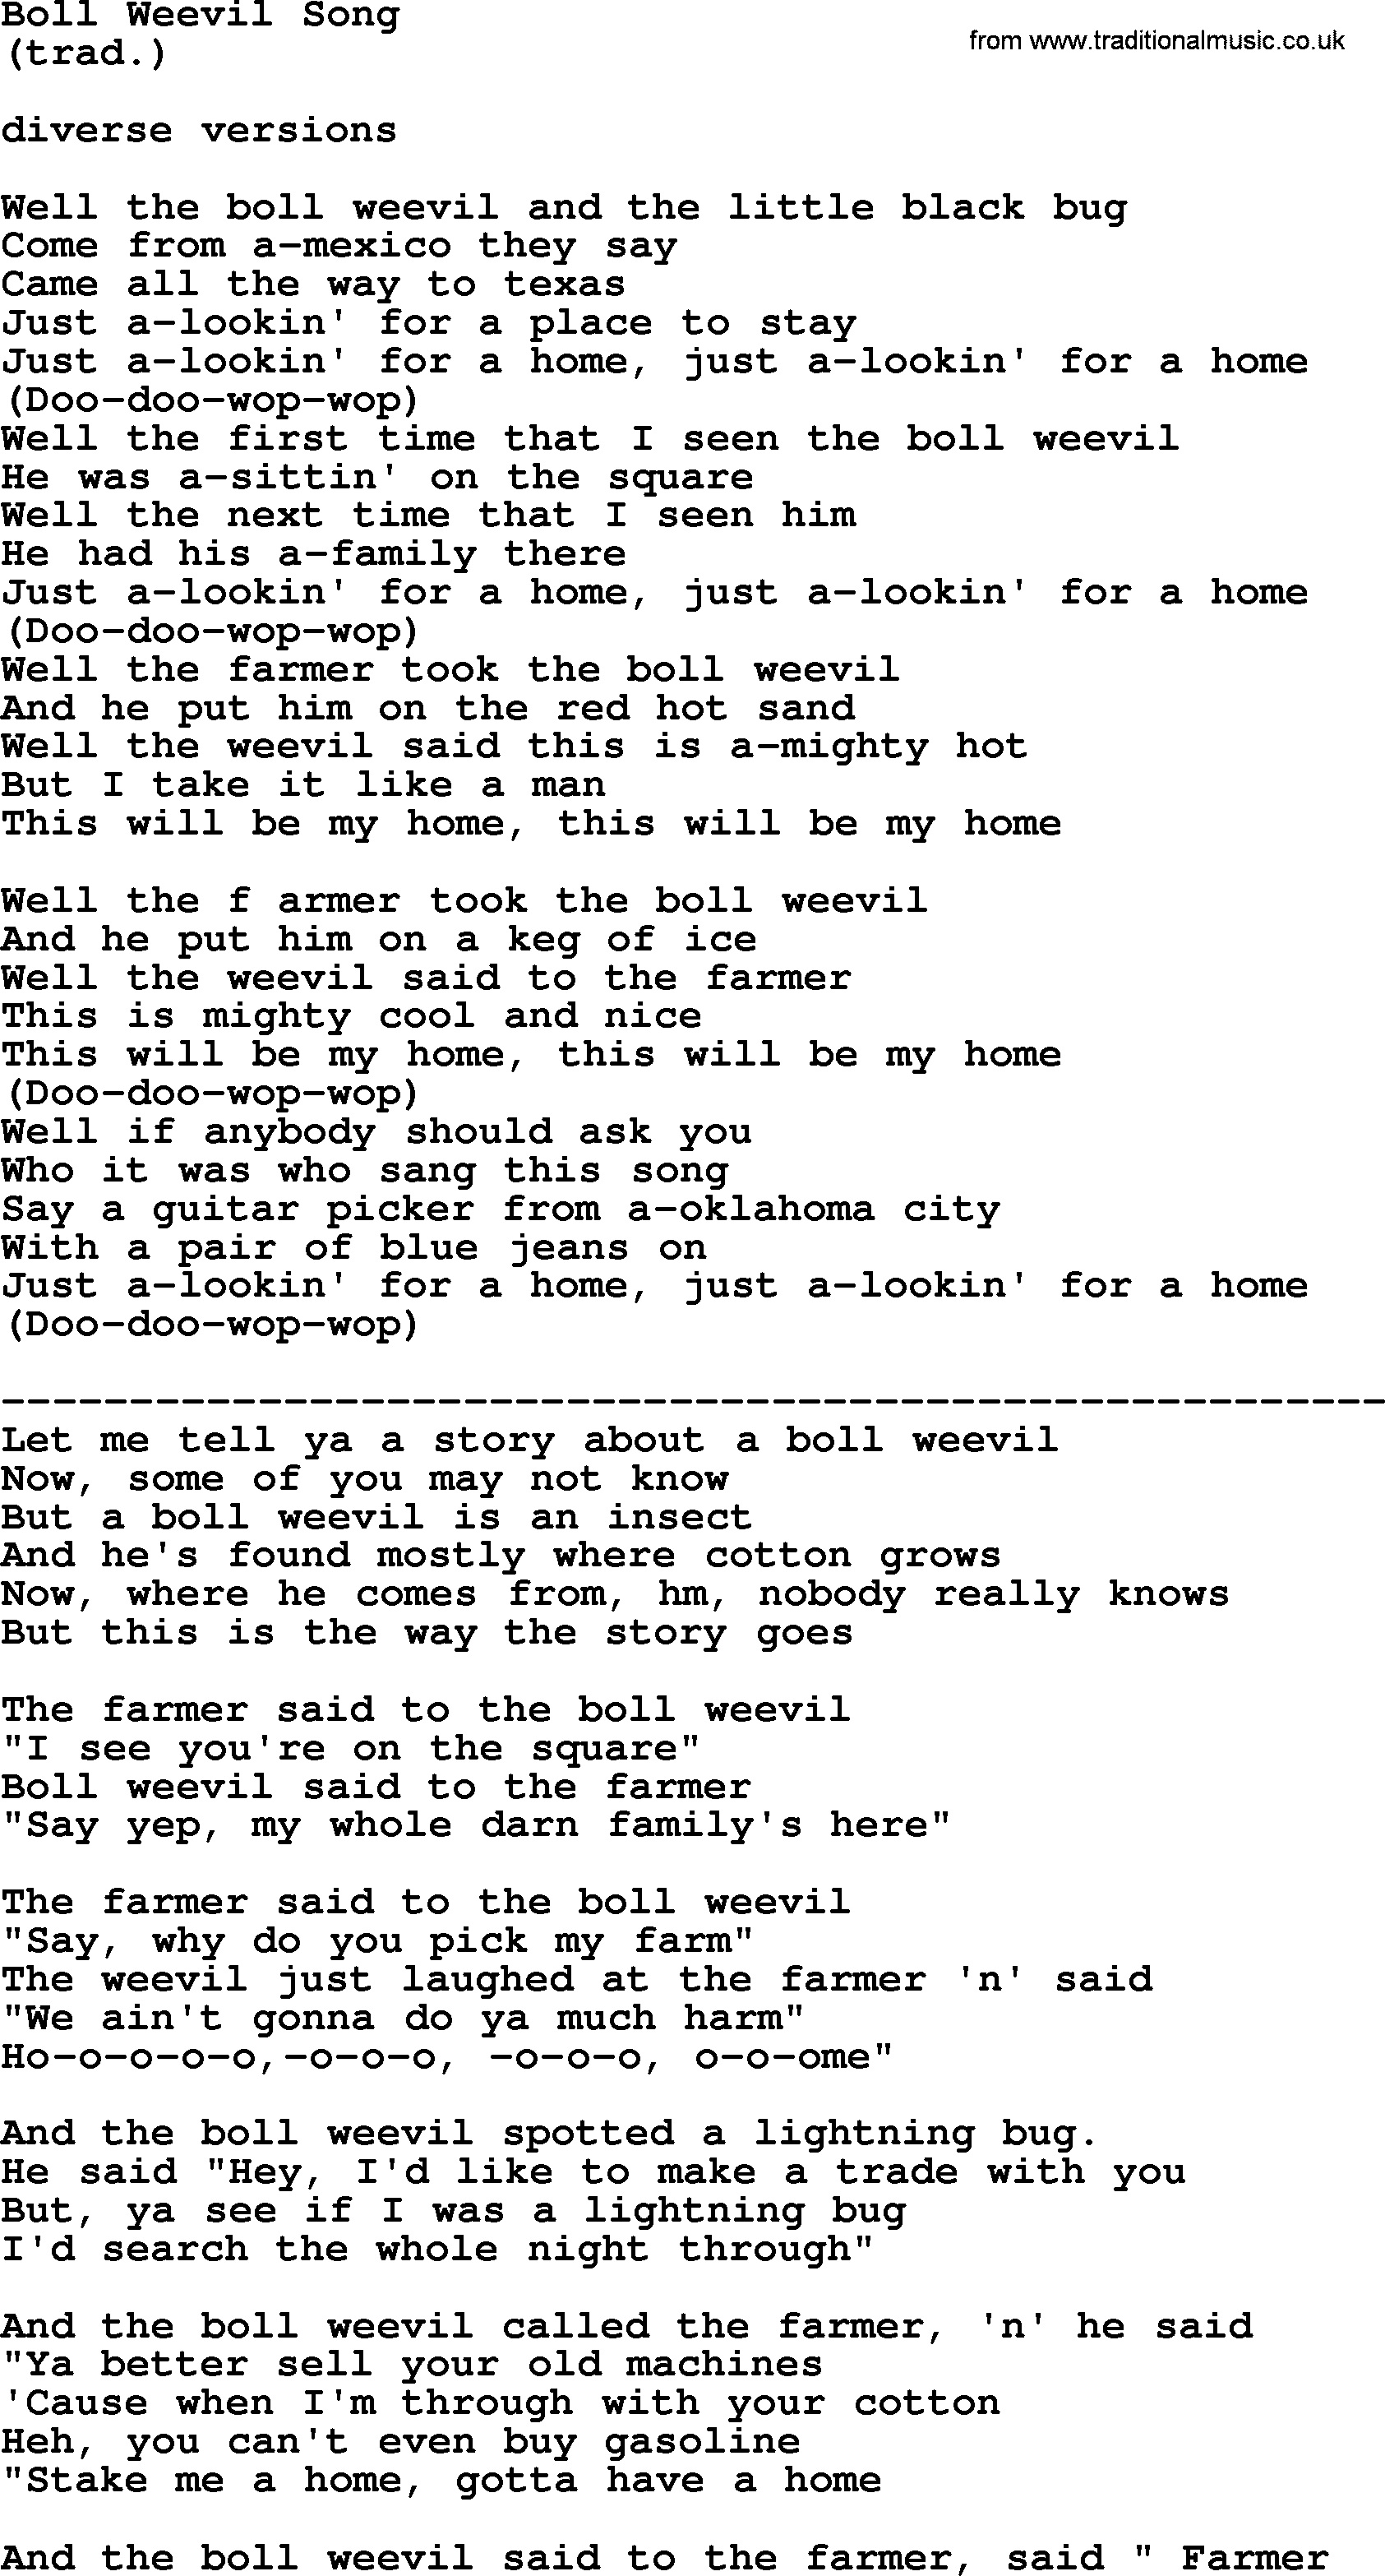 The Byrds song Boll Weevil Song, lyrics